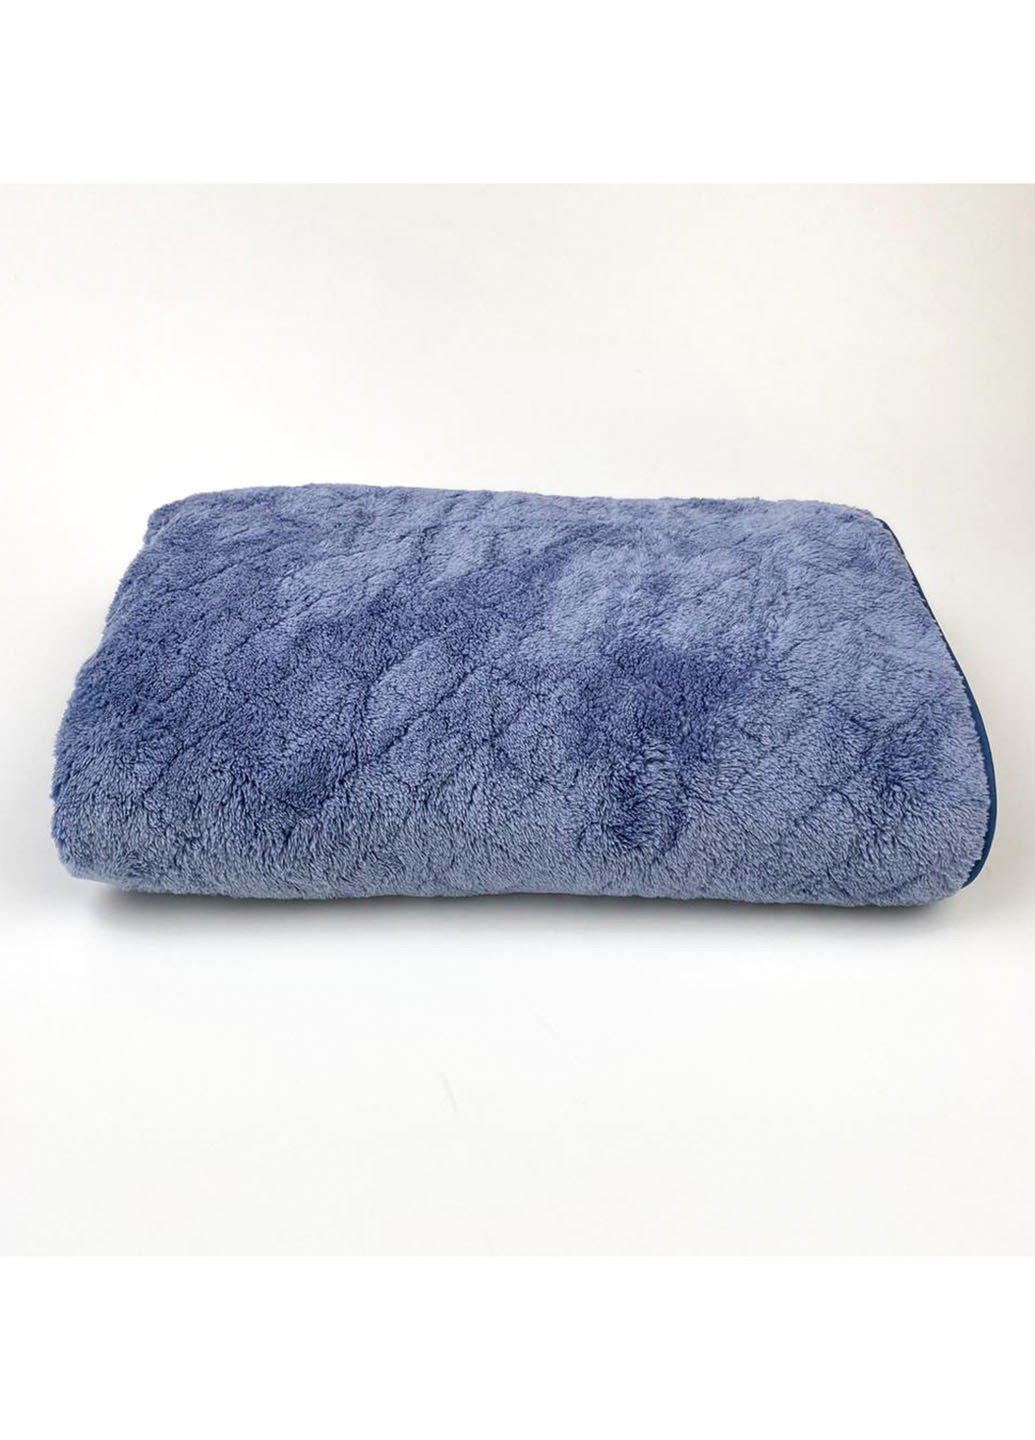 Homedec полотенце банное микрофибра 140х70 см однотонный синий производство - Турция